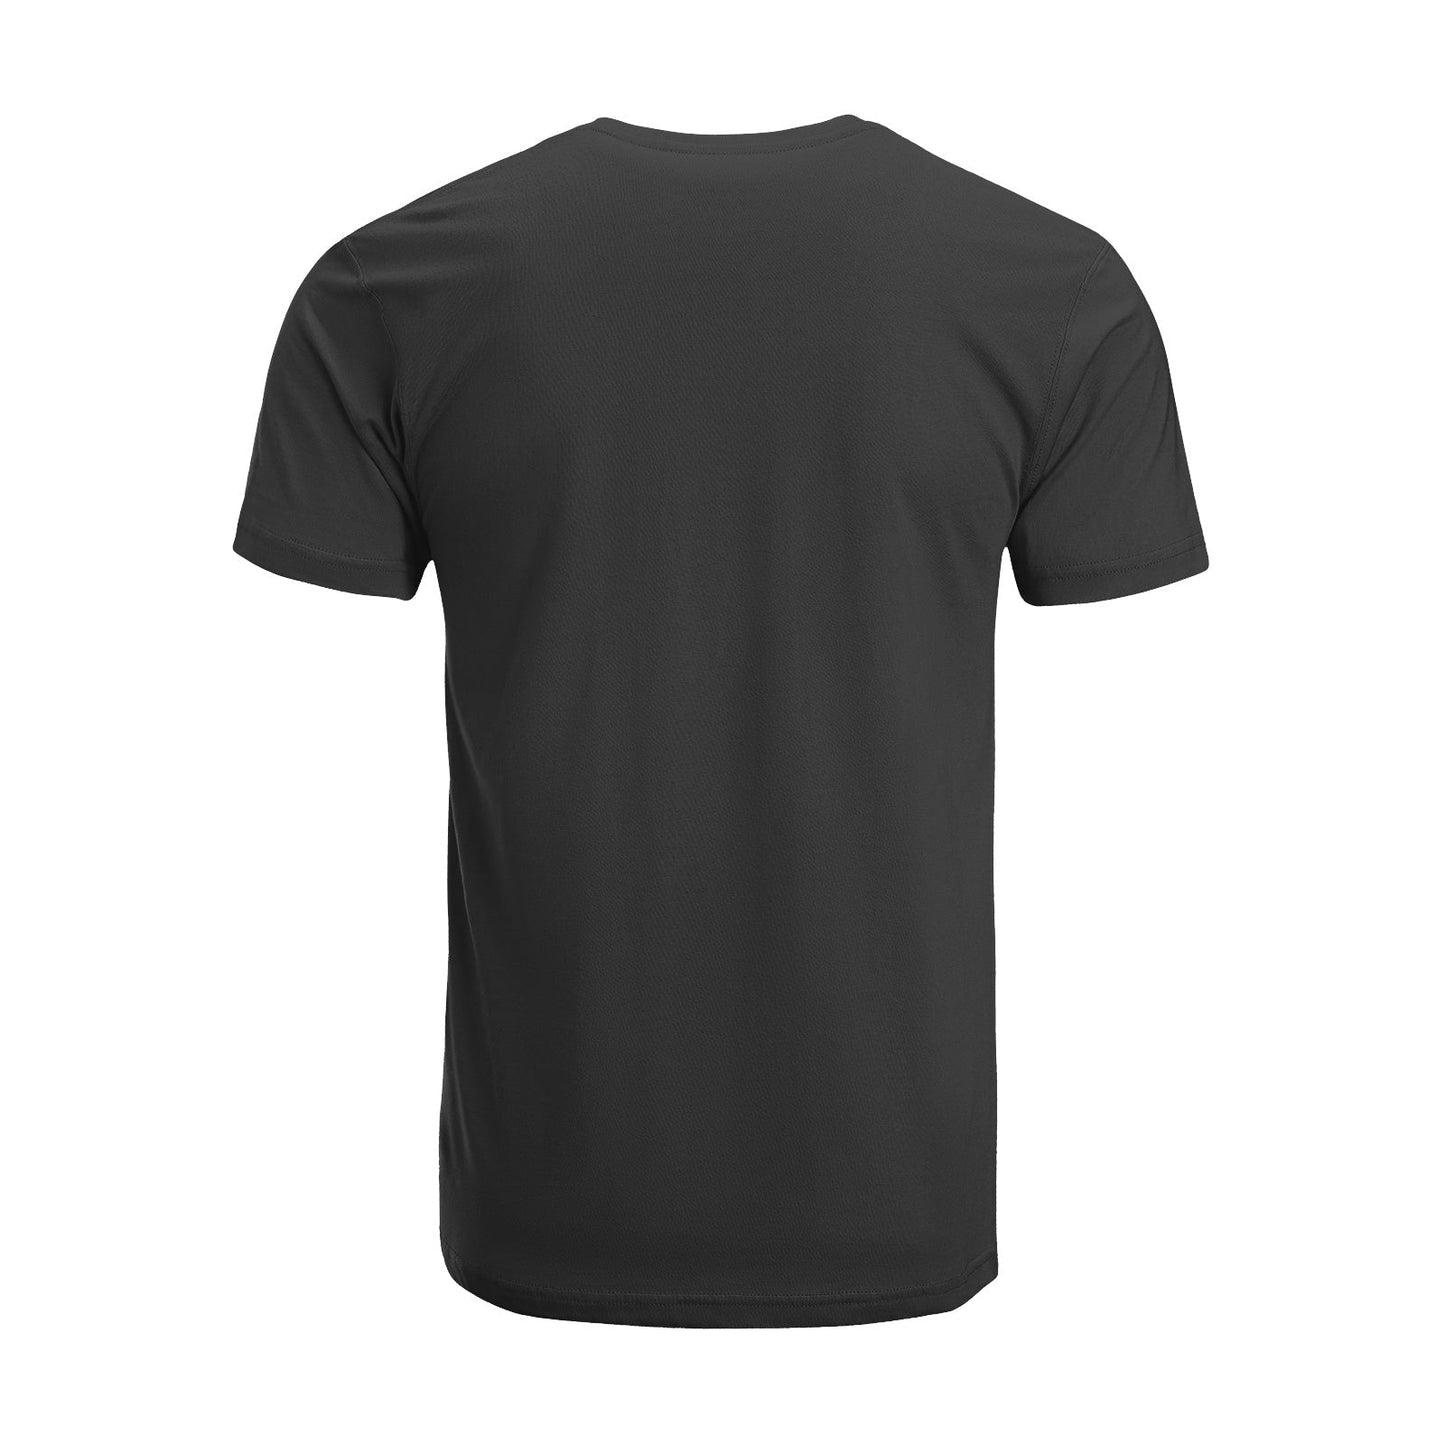 Unisex Short Sleeve Crew Neck Cotton Jersey T-Shirt VEGAN 11